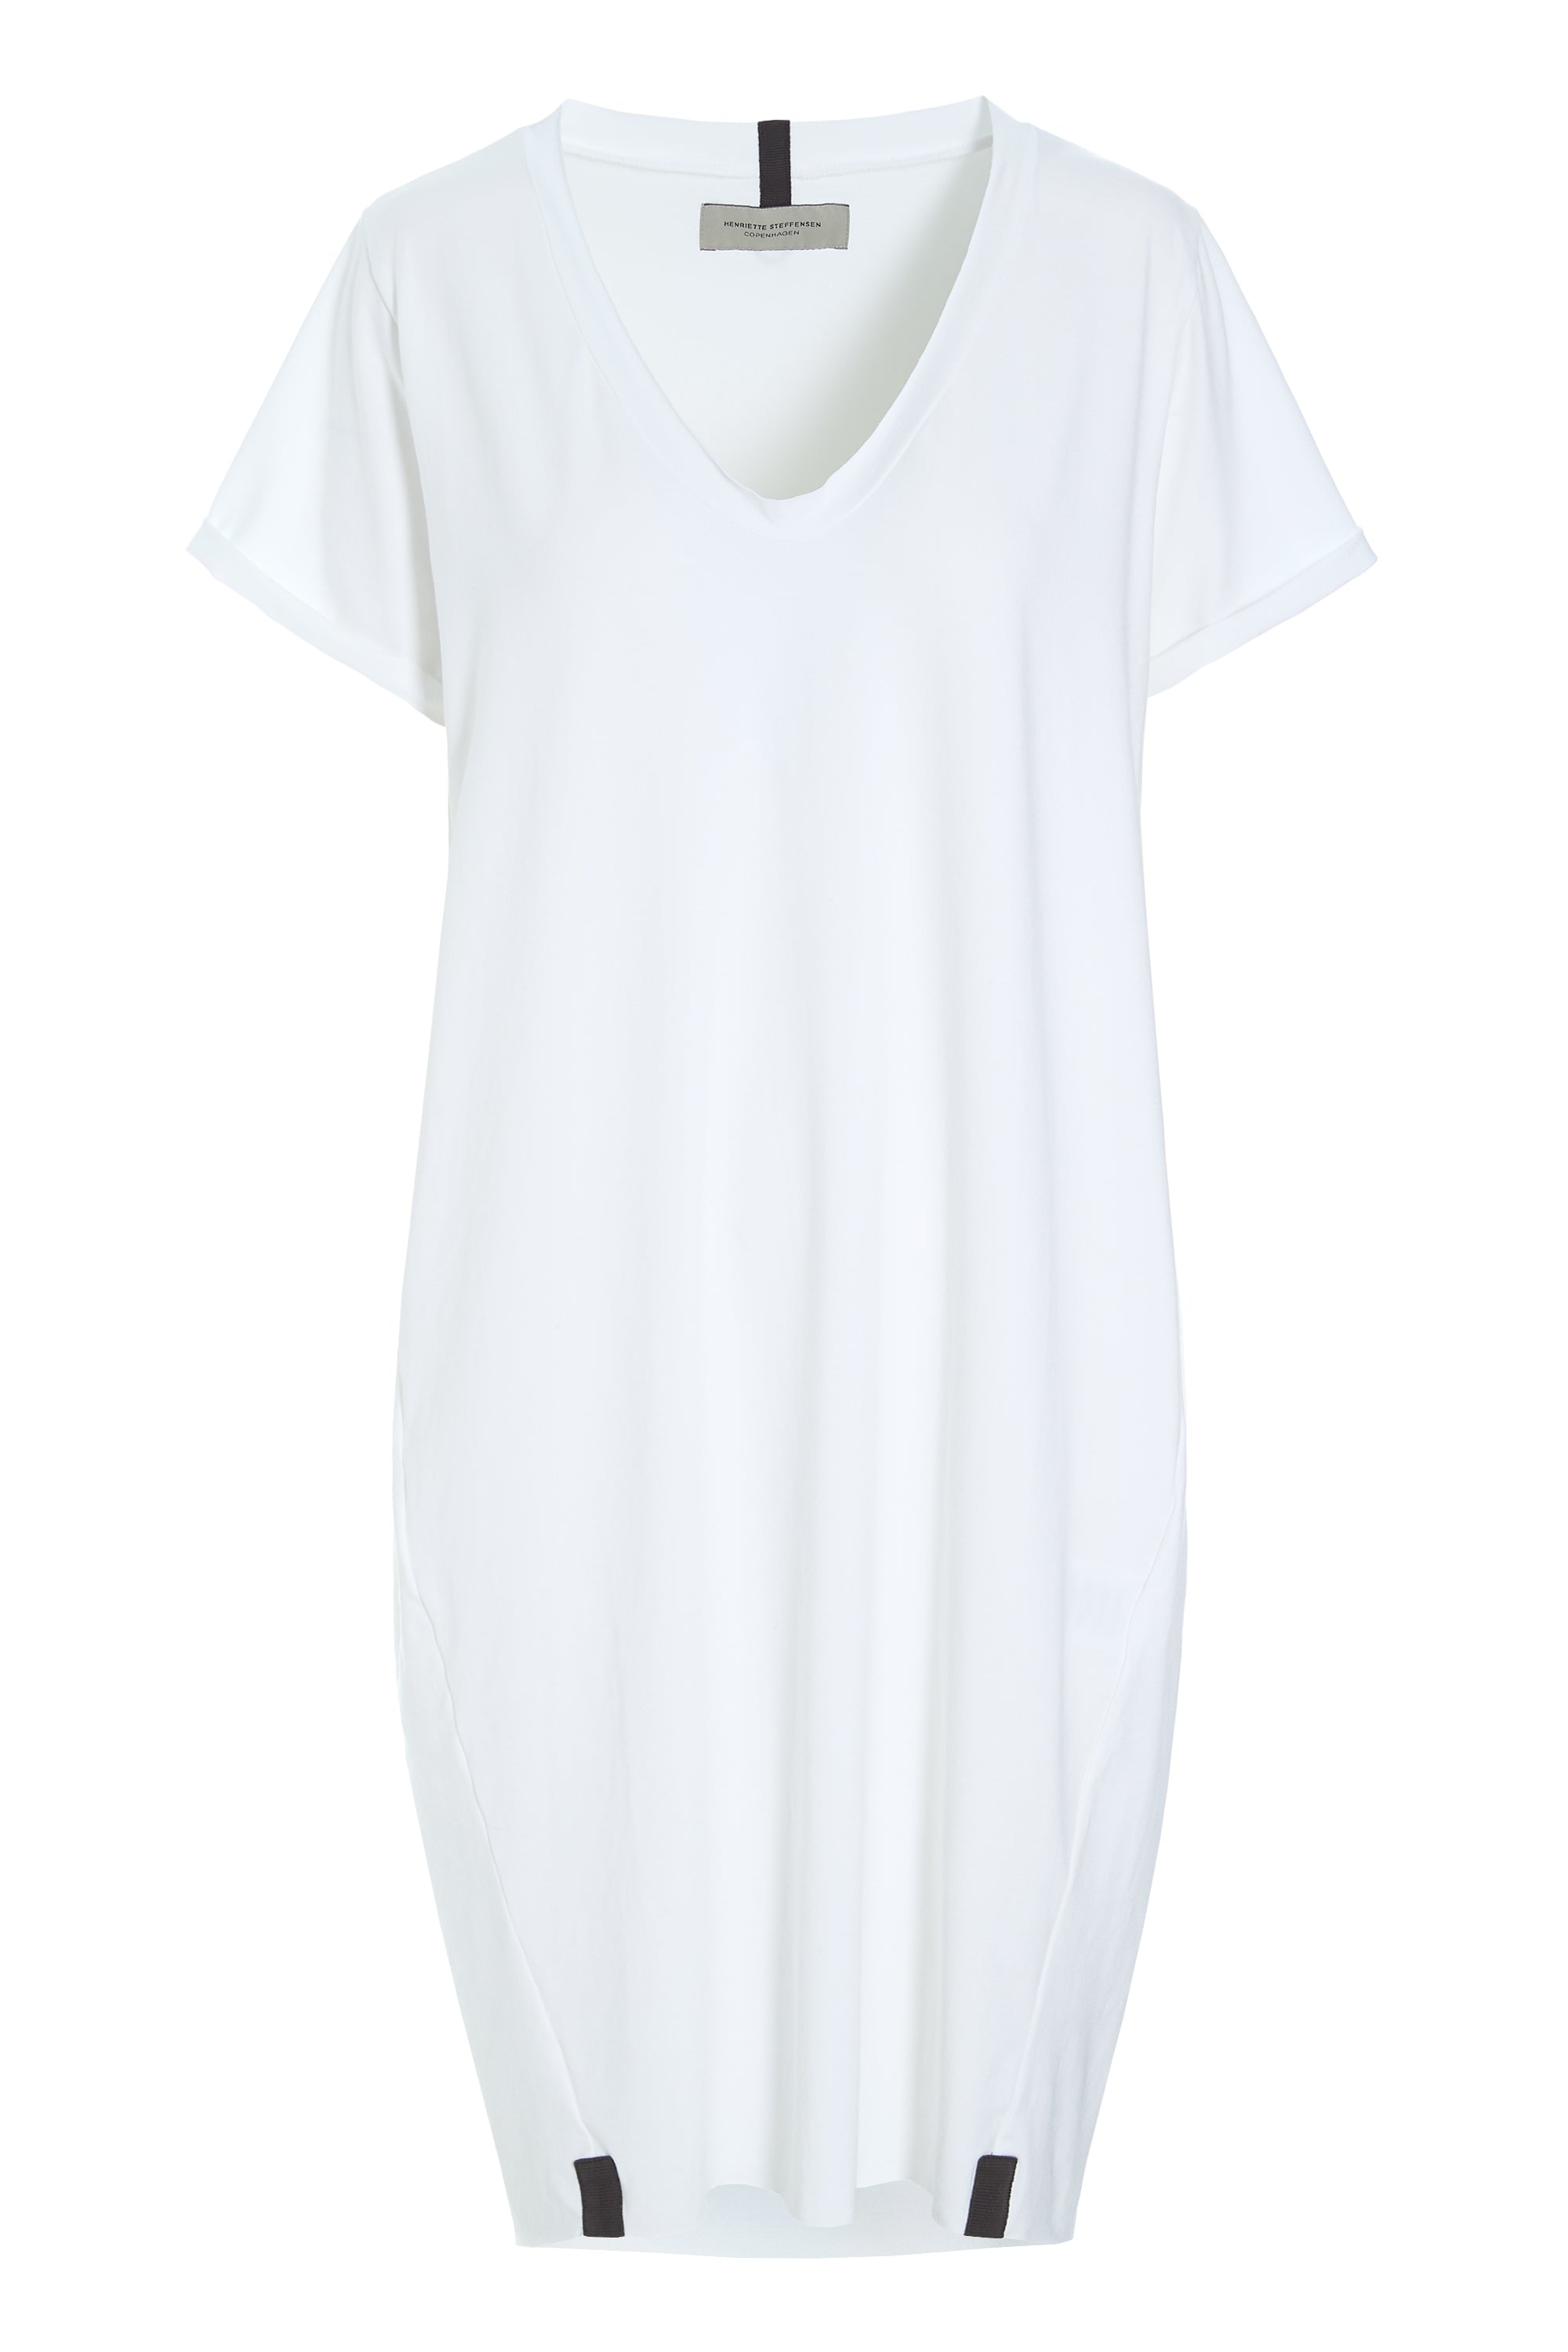 HENRIETTE STEFFENSEN COPENHAGEN DRESS V-NECK - 98049 DRESSES jersey WHITE 816